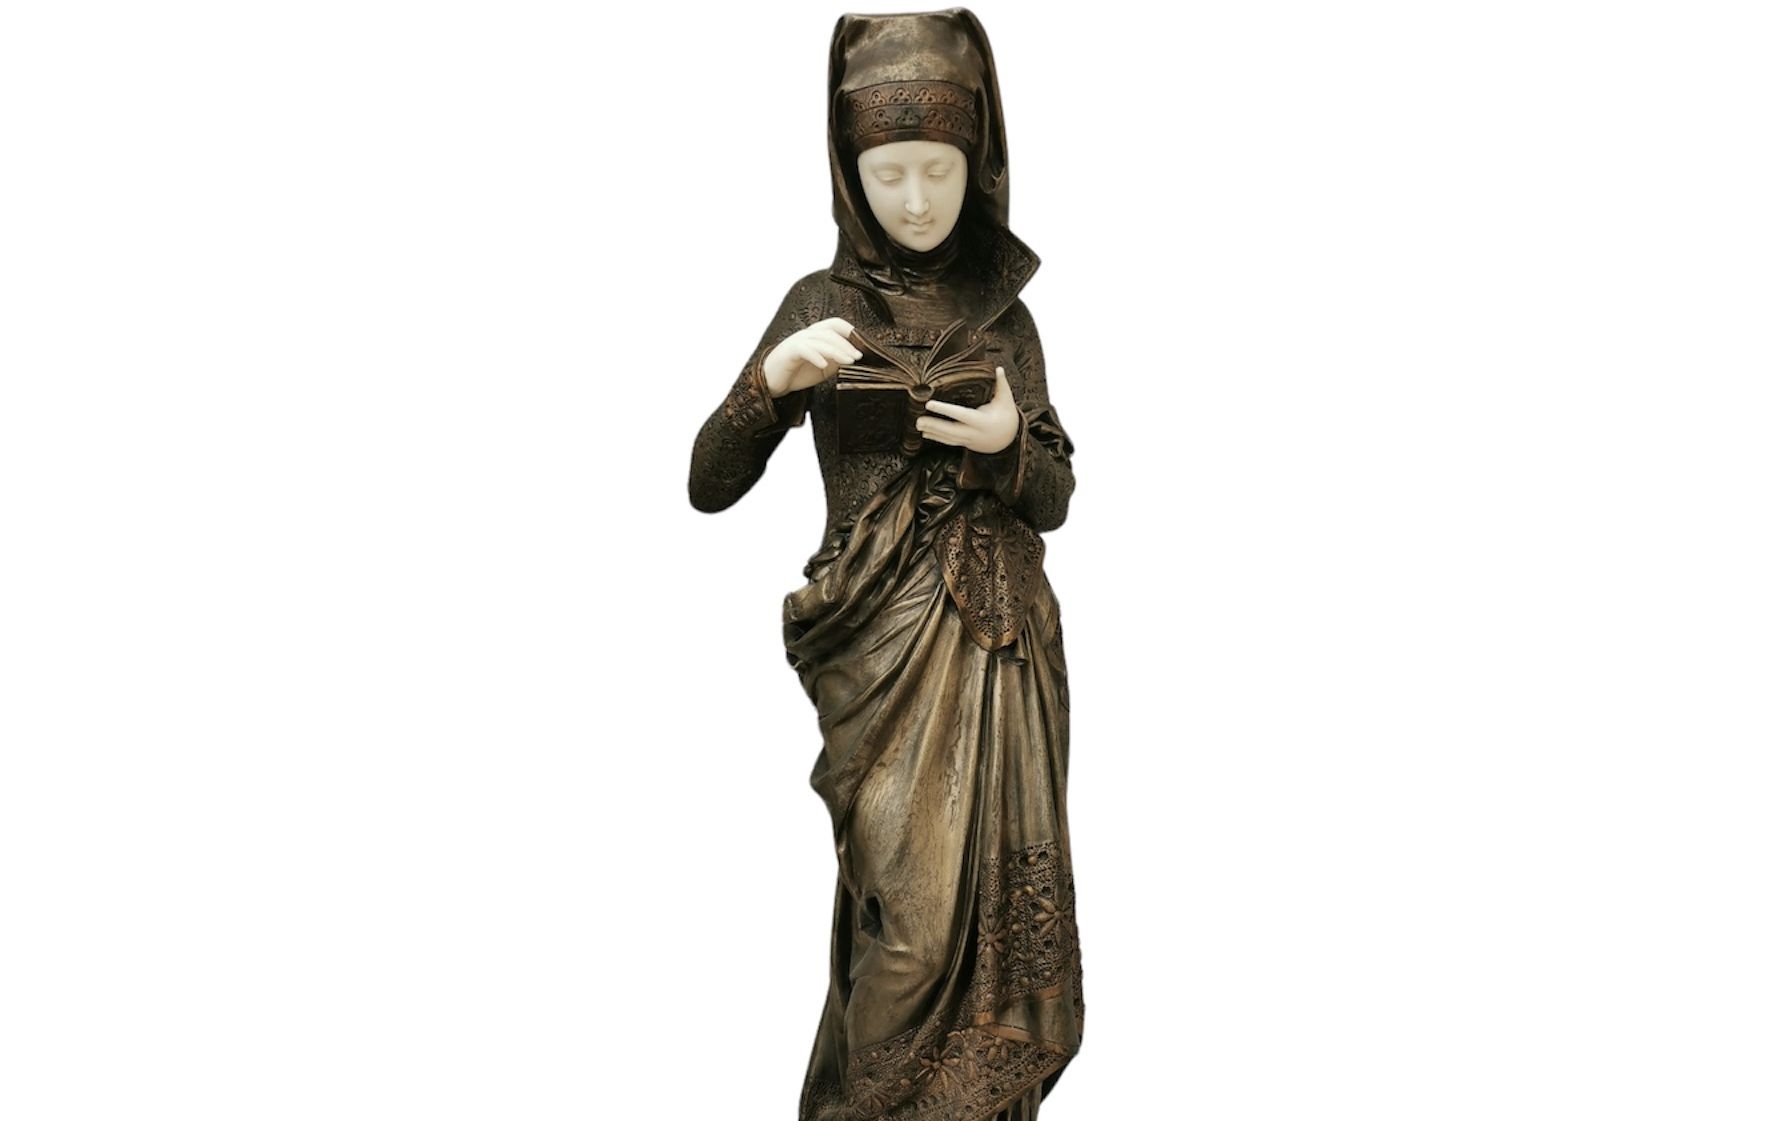 Carrier Belleuse, Liseuse, bronze